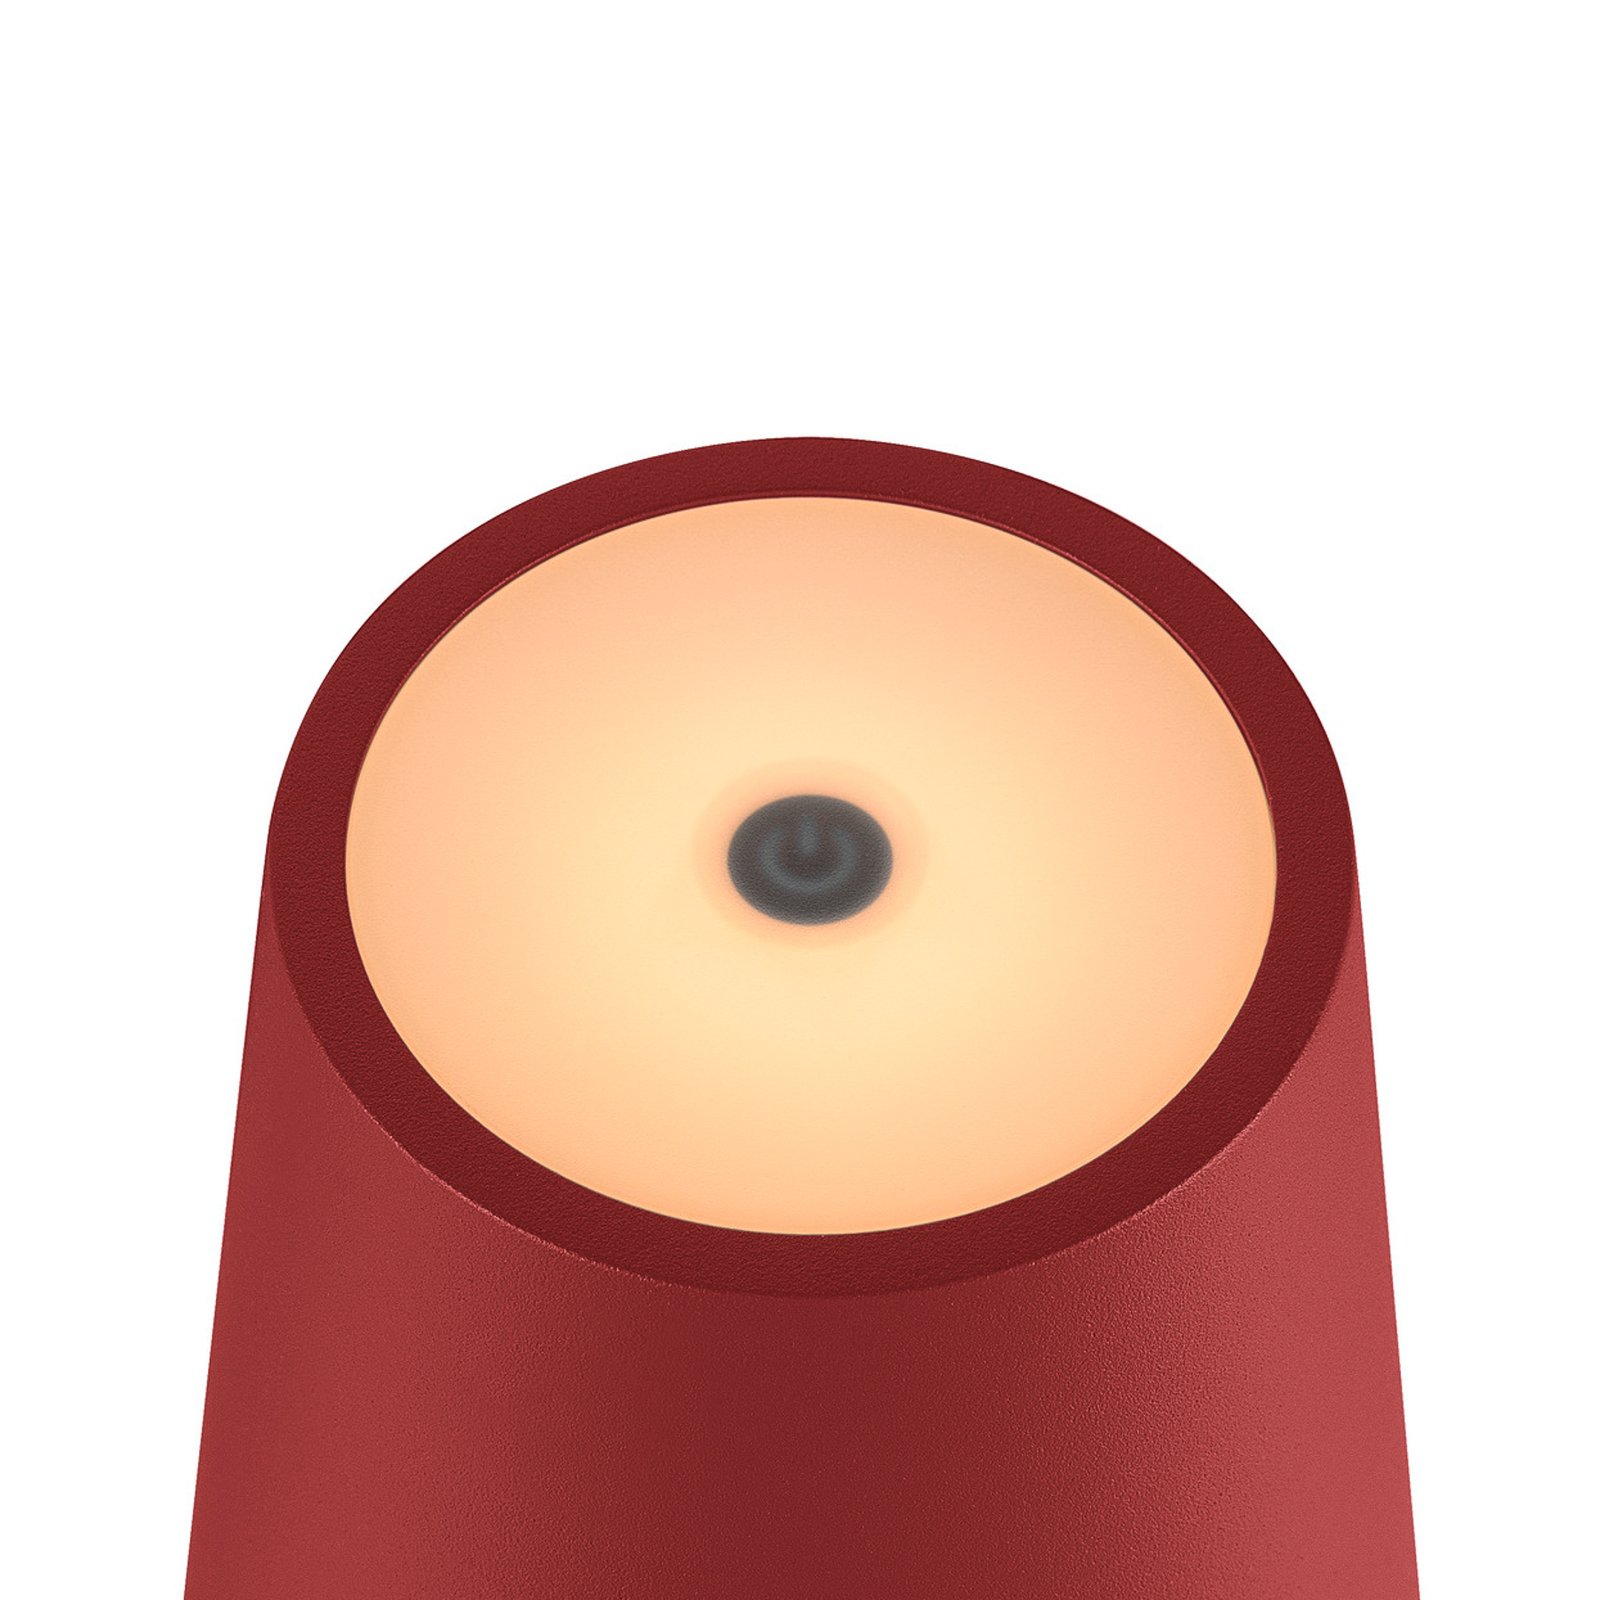 SLV LED-Akkulampe Vinolina Two, rot, Alu, Ø 11 cm, IP65, CCT